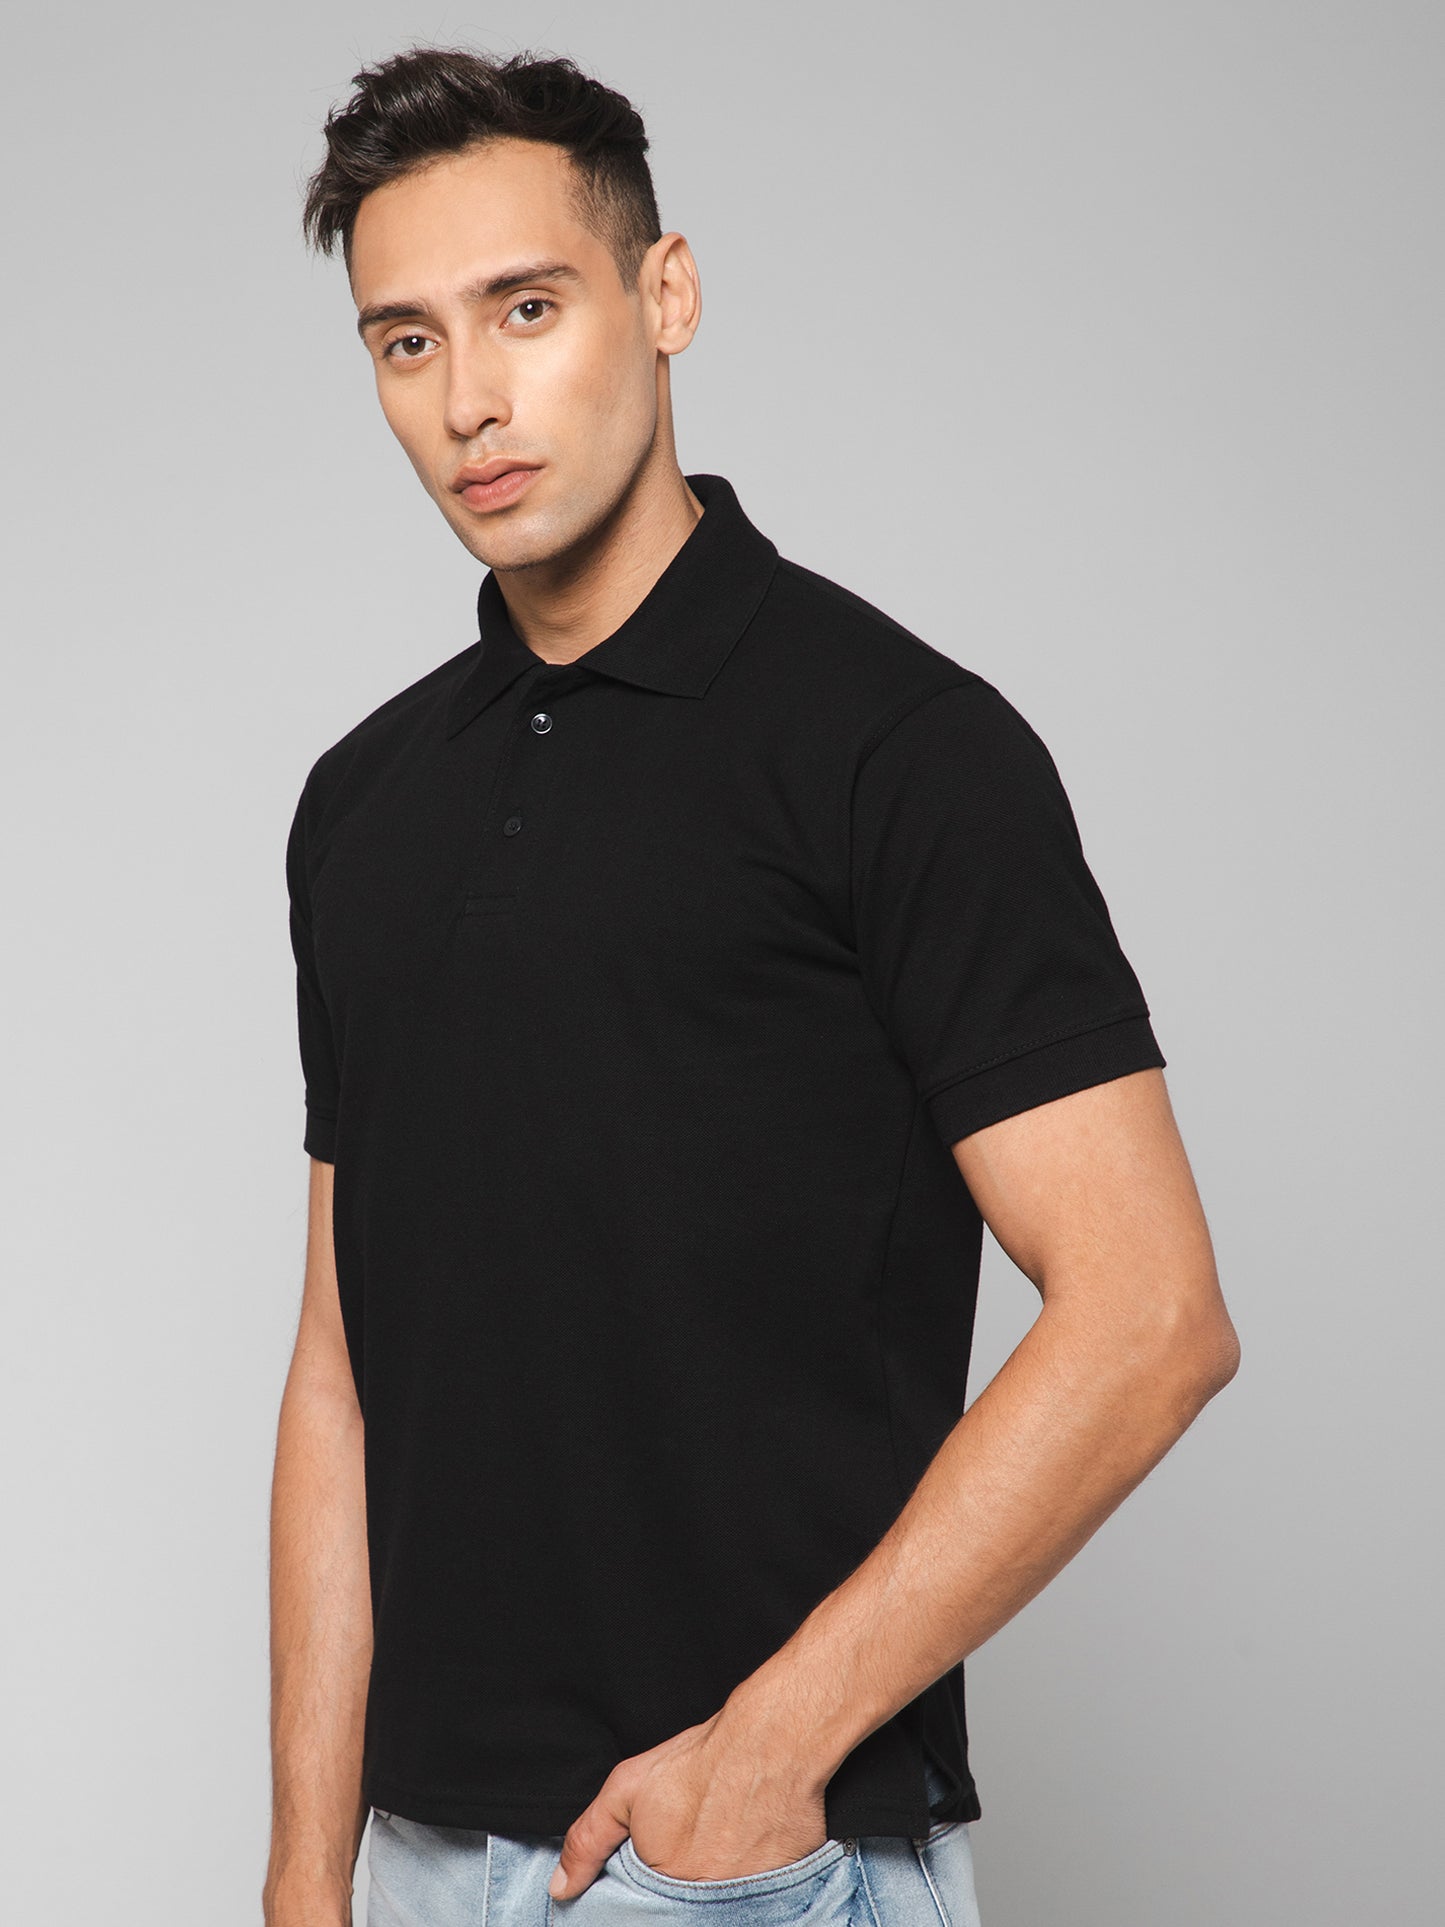 Black Polo Cotton T-shirt